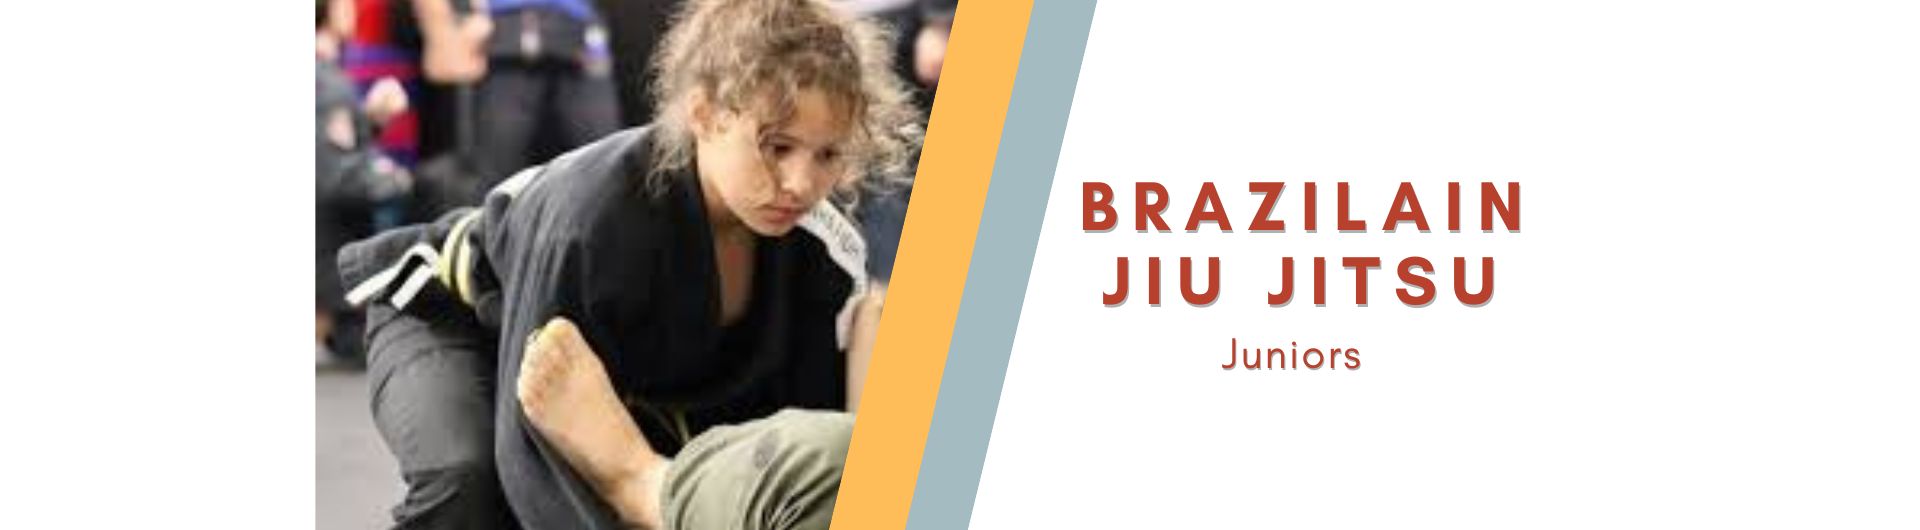 kids brazilian jiu Jitsu, Sussex, Seaford, BJJ childrens classes